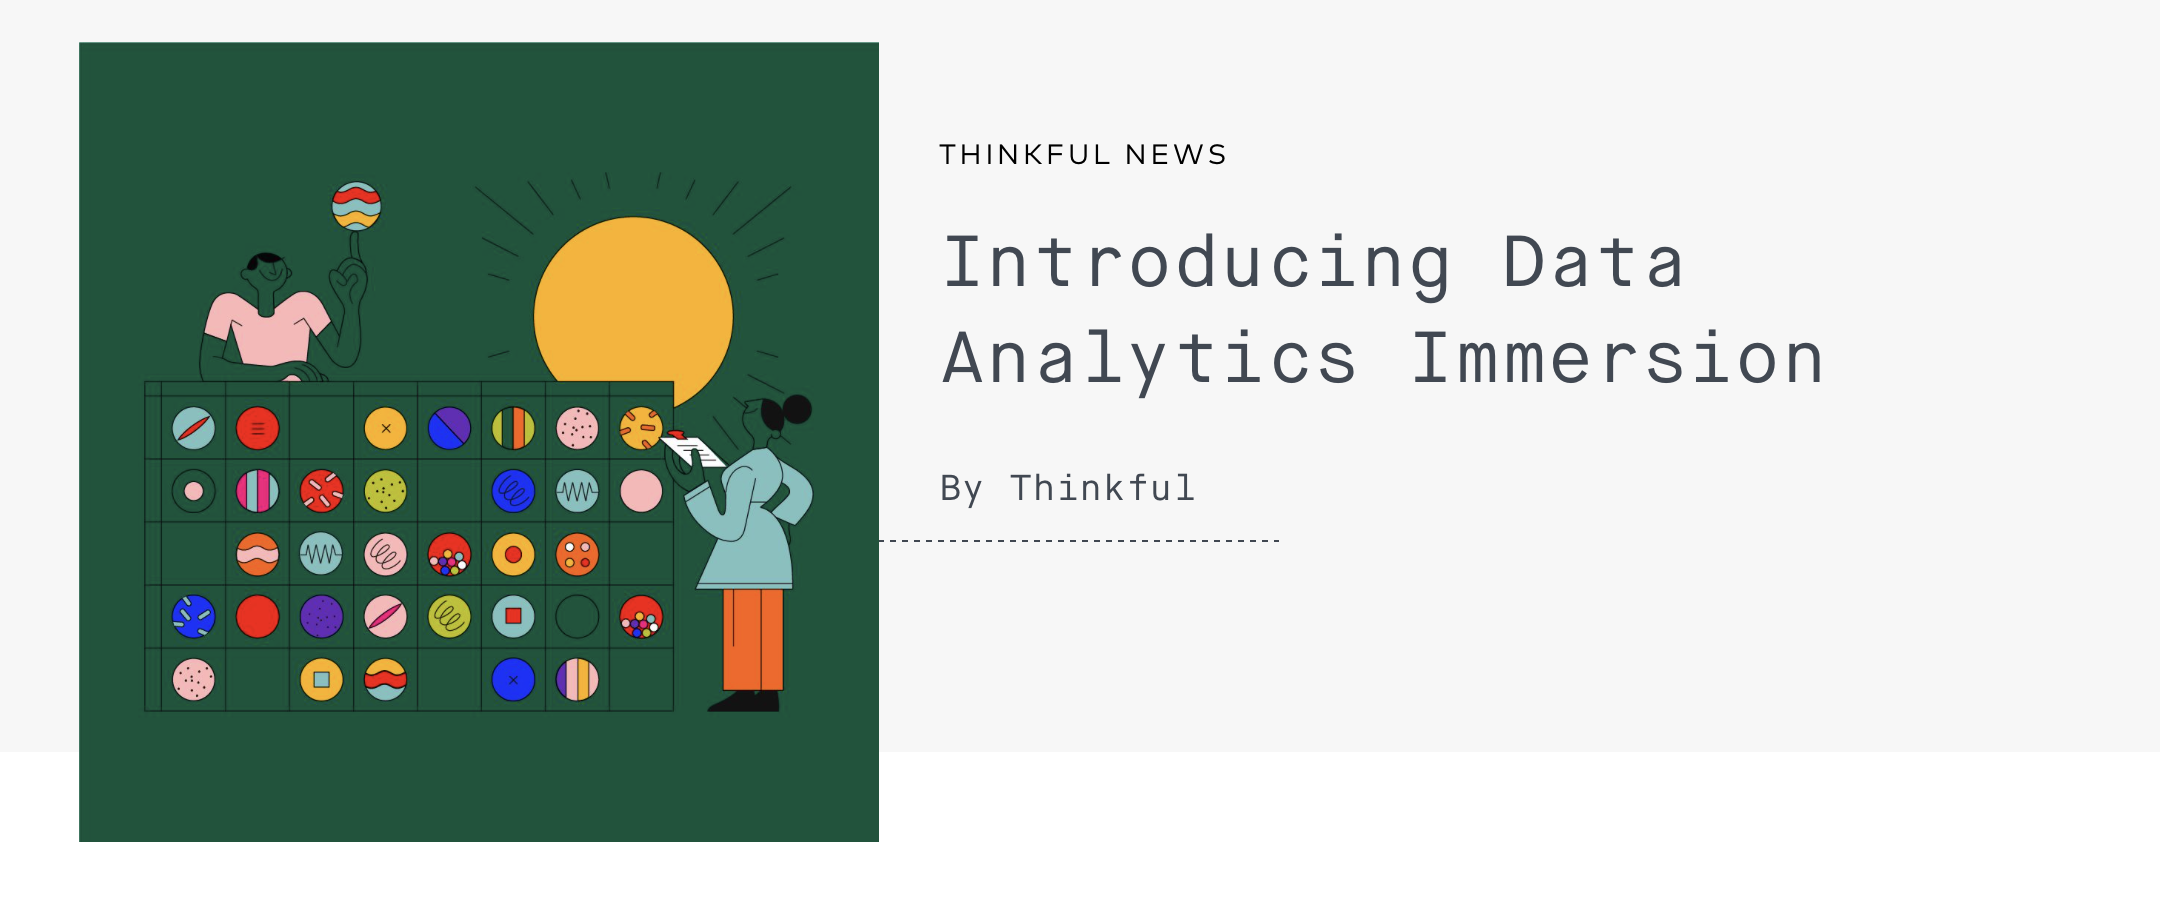 Introducing Data Analytics Immersion